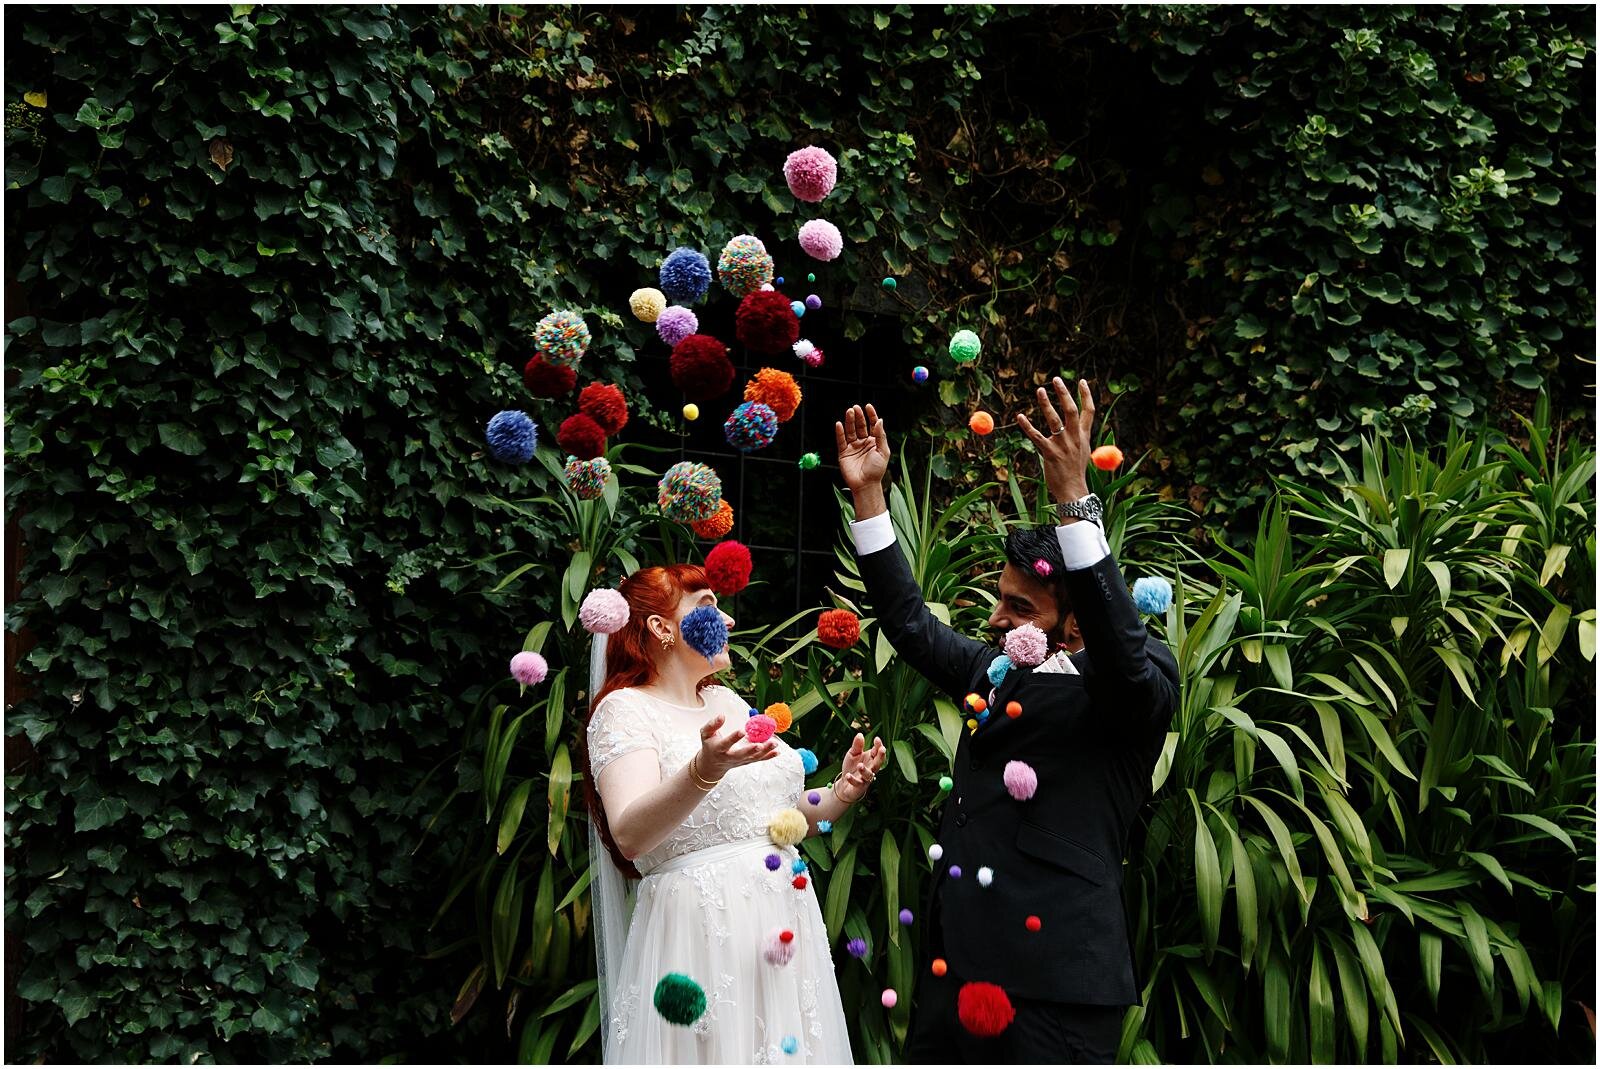 18modern wedding photography melbourne.jpg